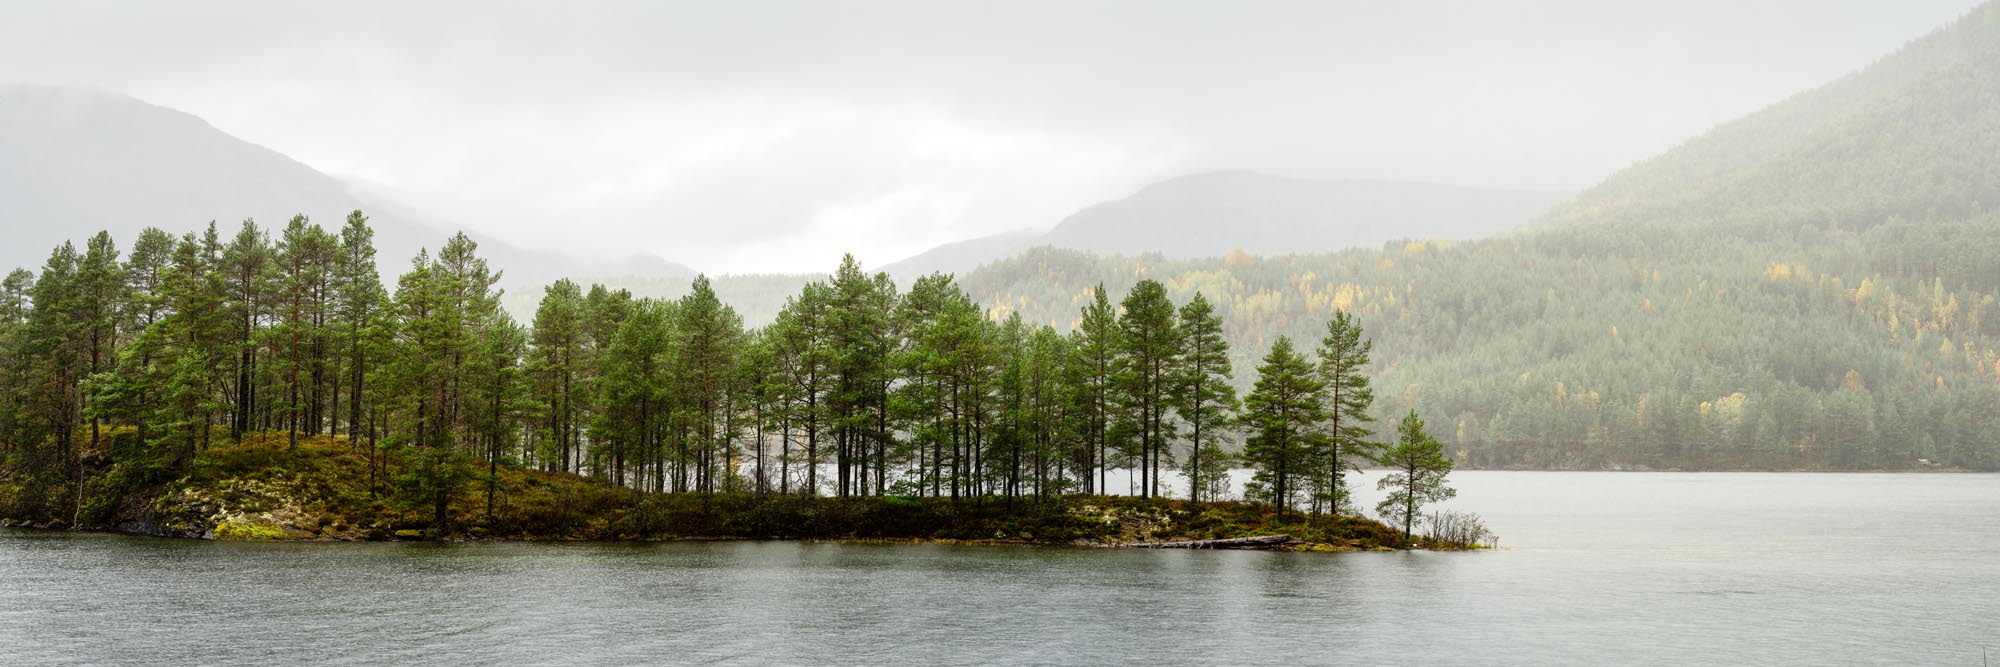 Panorama of Island Pine trees in Hornindalsvatn Lake in Norway